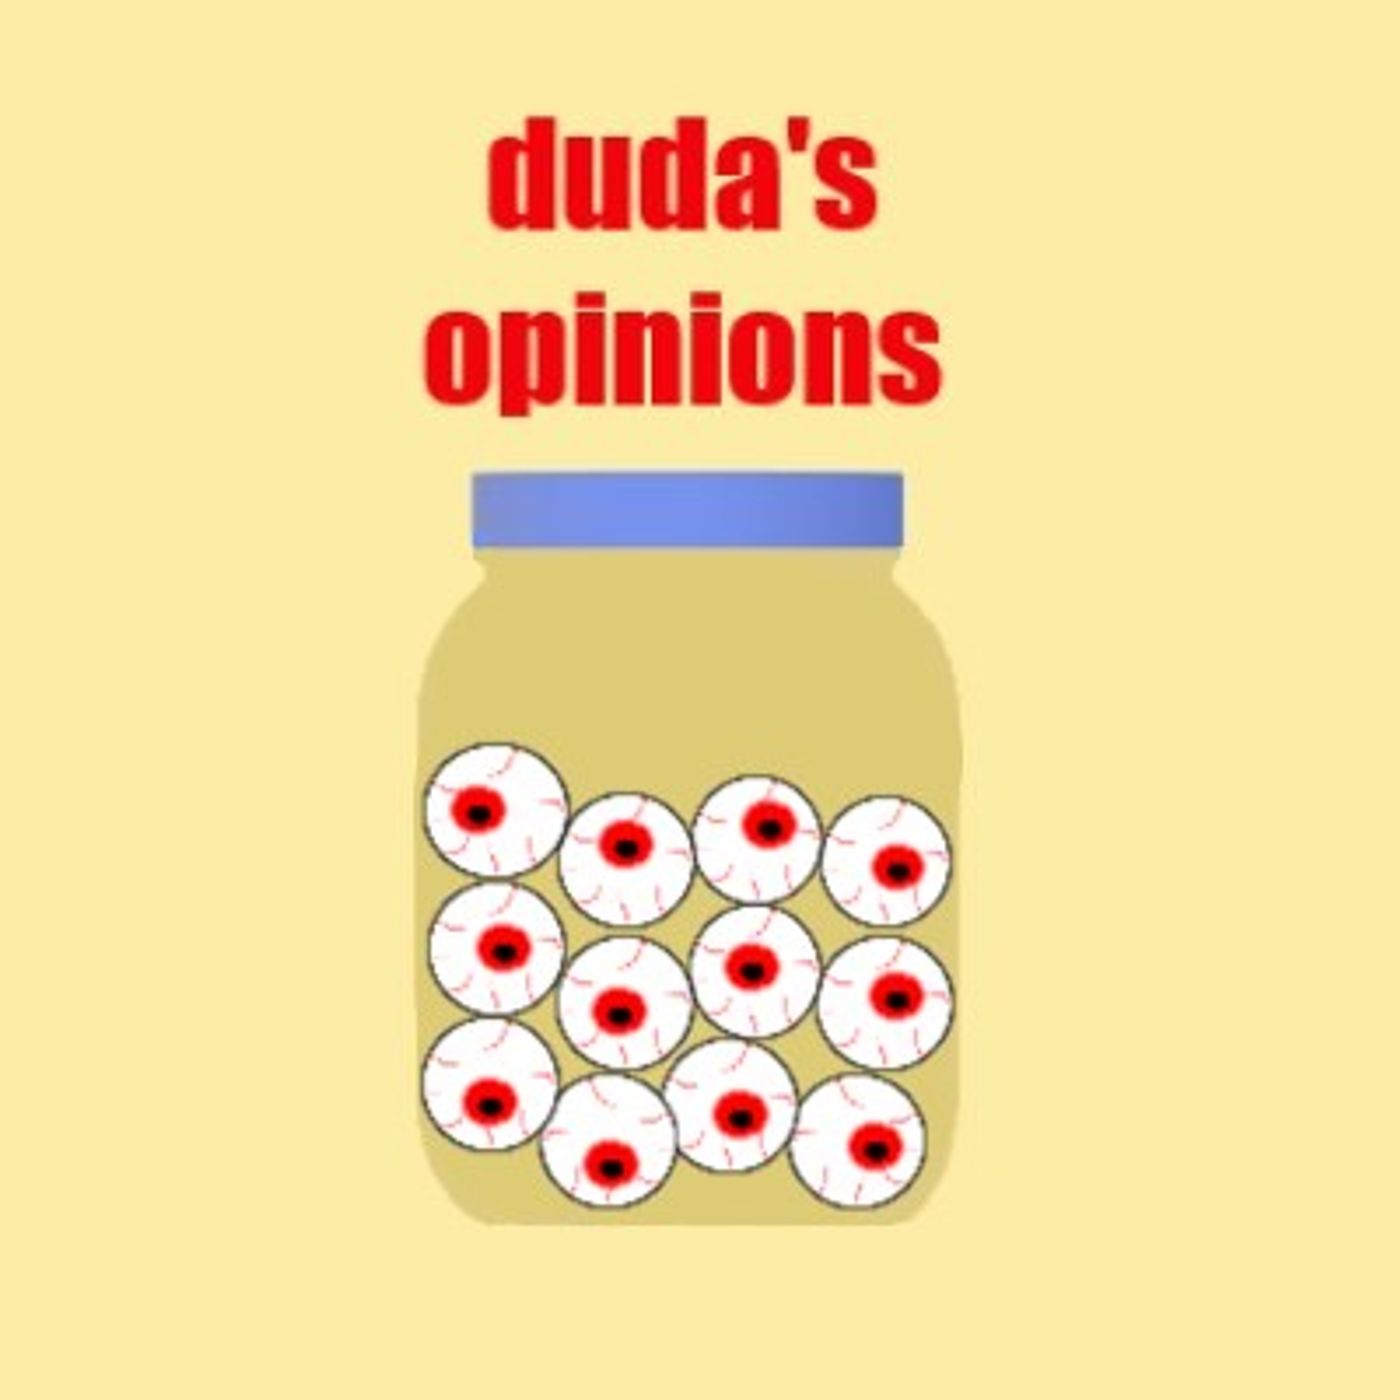 duda's opinions